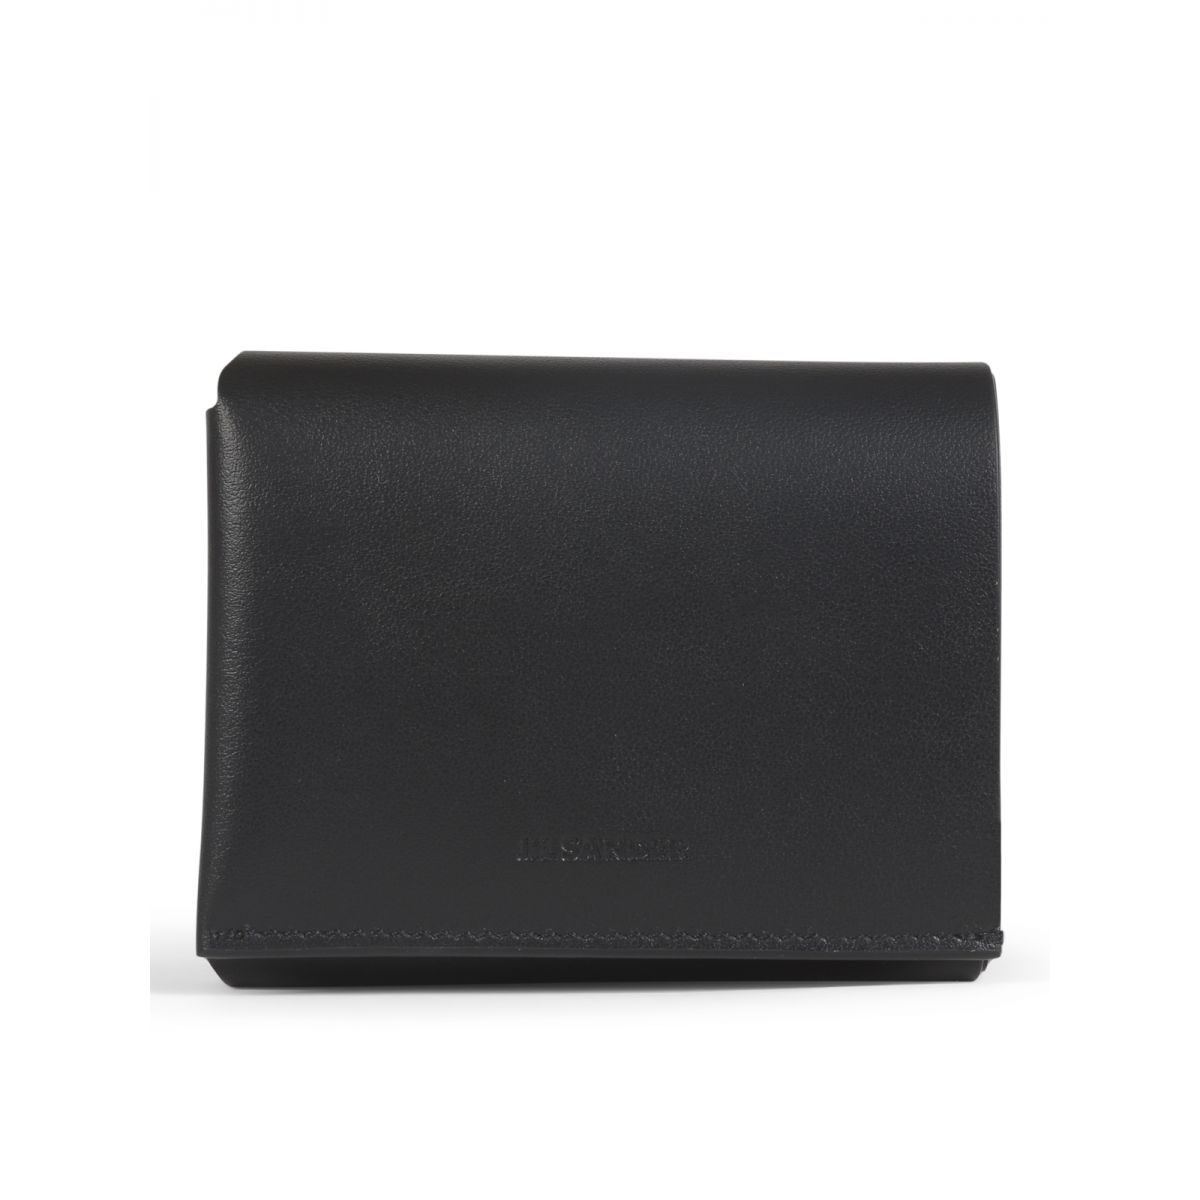 JIL SANDER - Tri-fold leather wallet